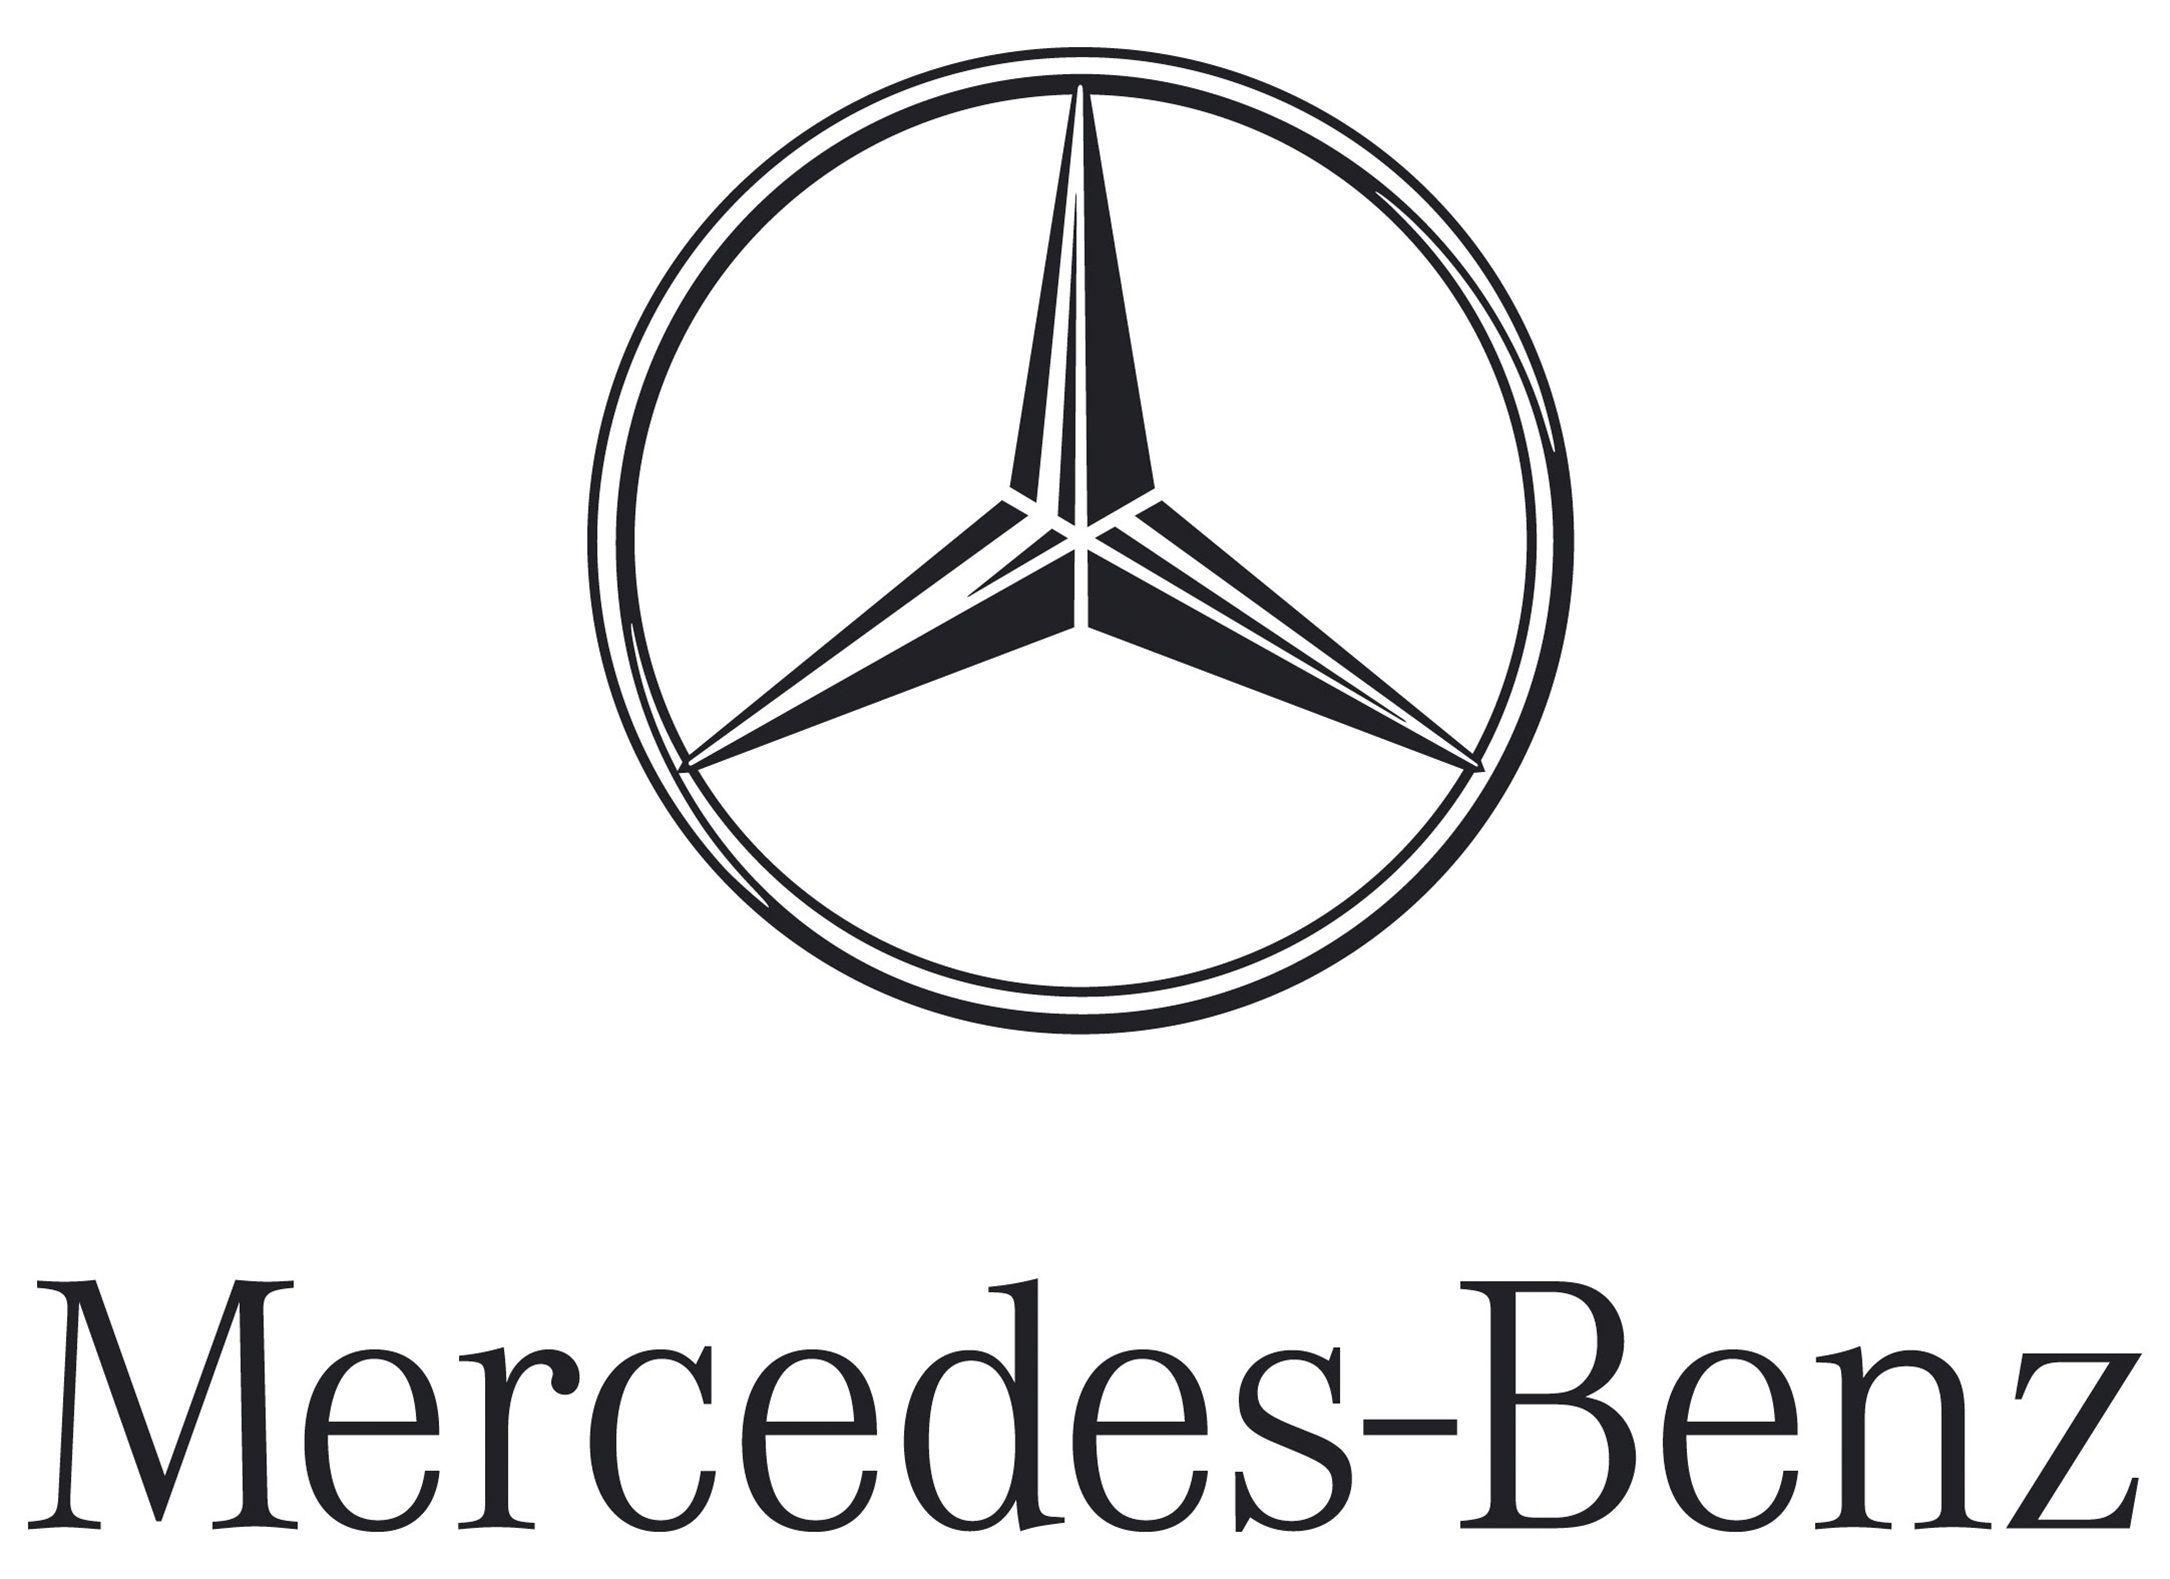 Benz Trucks Logo - Mercedes Benz Logo. Logos & trademarks. Mercedes benz